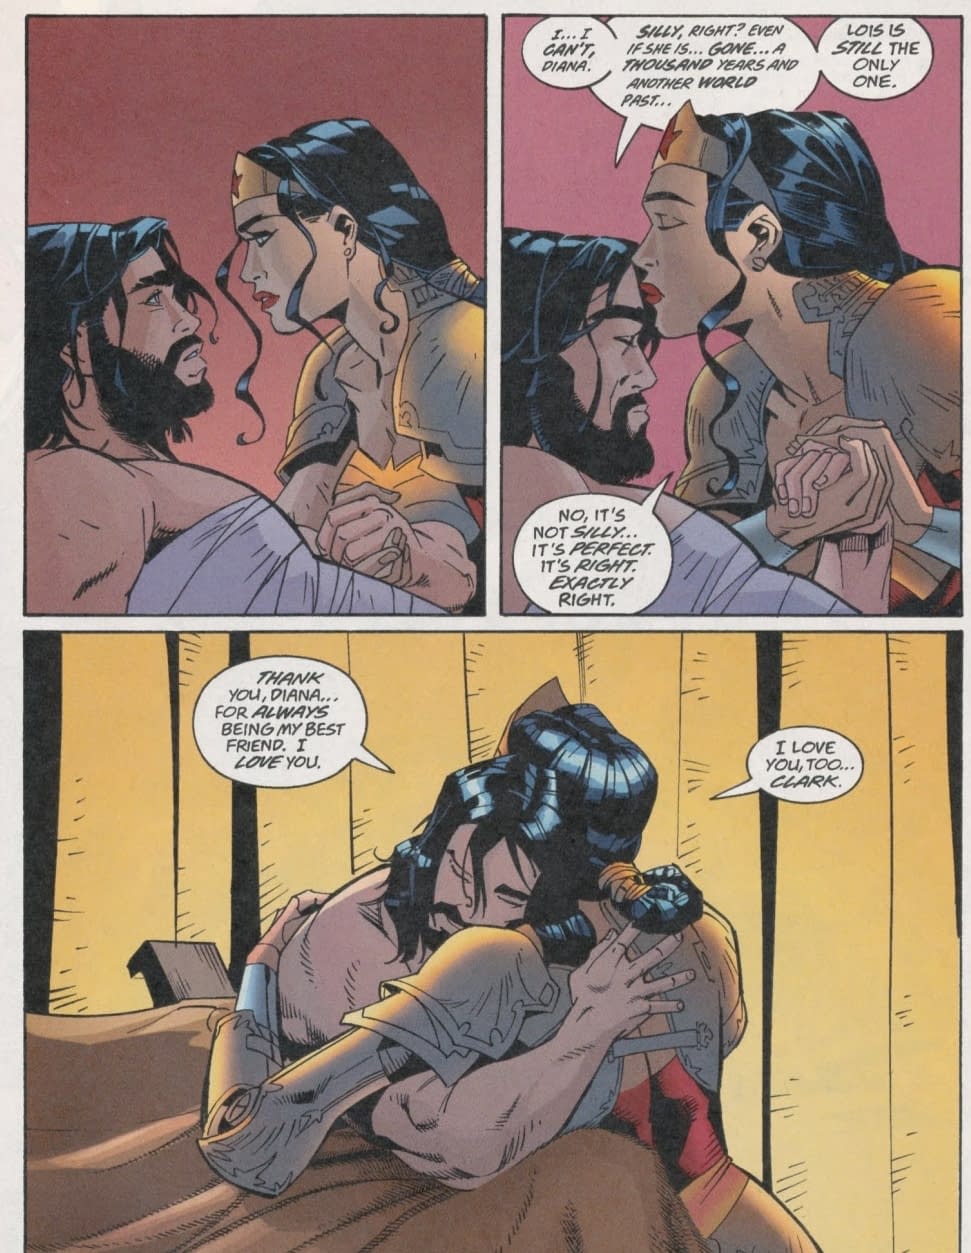 Batman #39, Action Comics #761 And The Temptations Of Wonder Woman (SPOILERS)